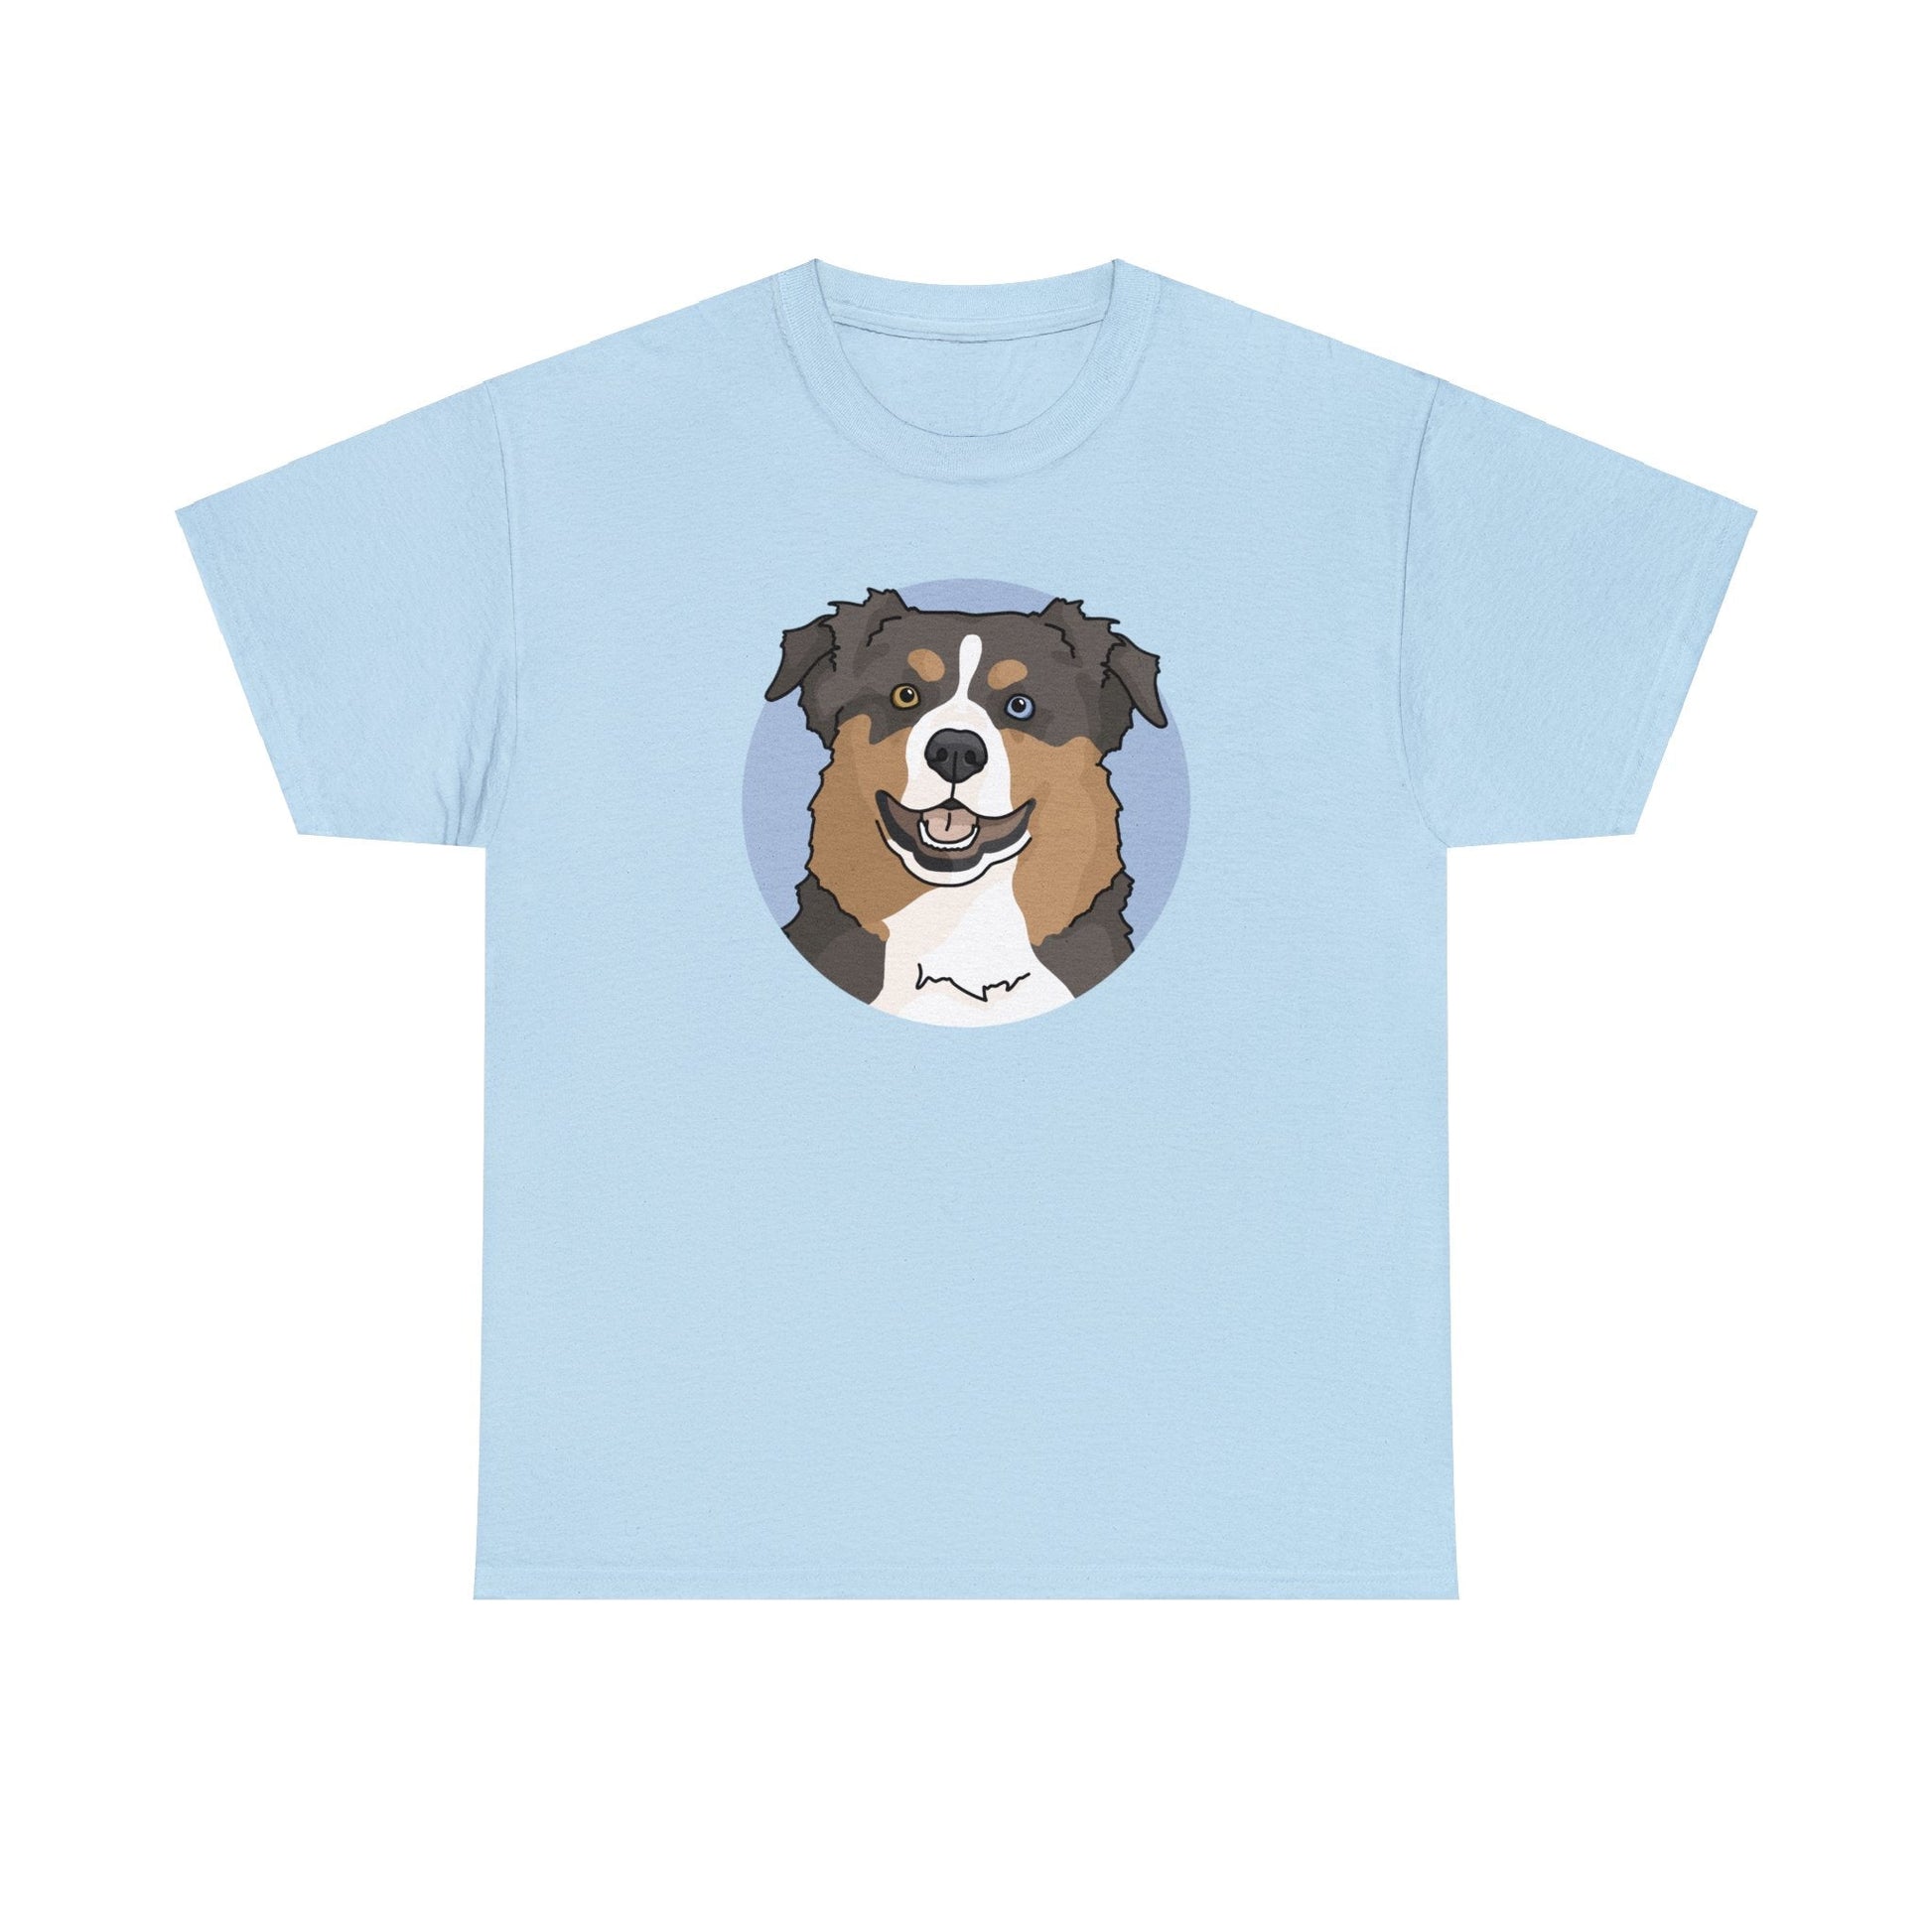 Australian Shepherd | T-shirt - Detezi Designs-32694239283499080904